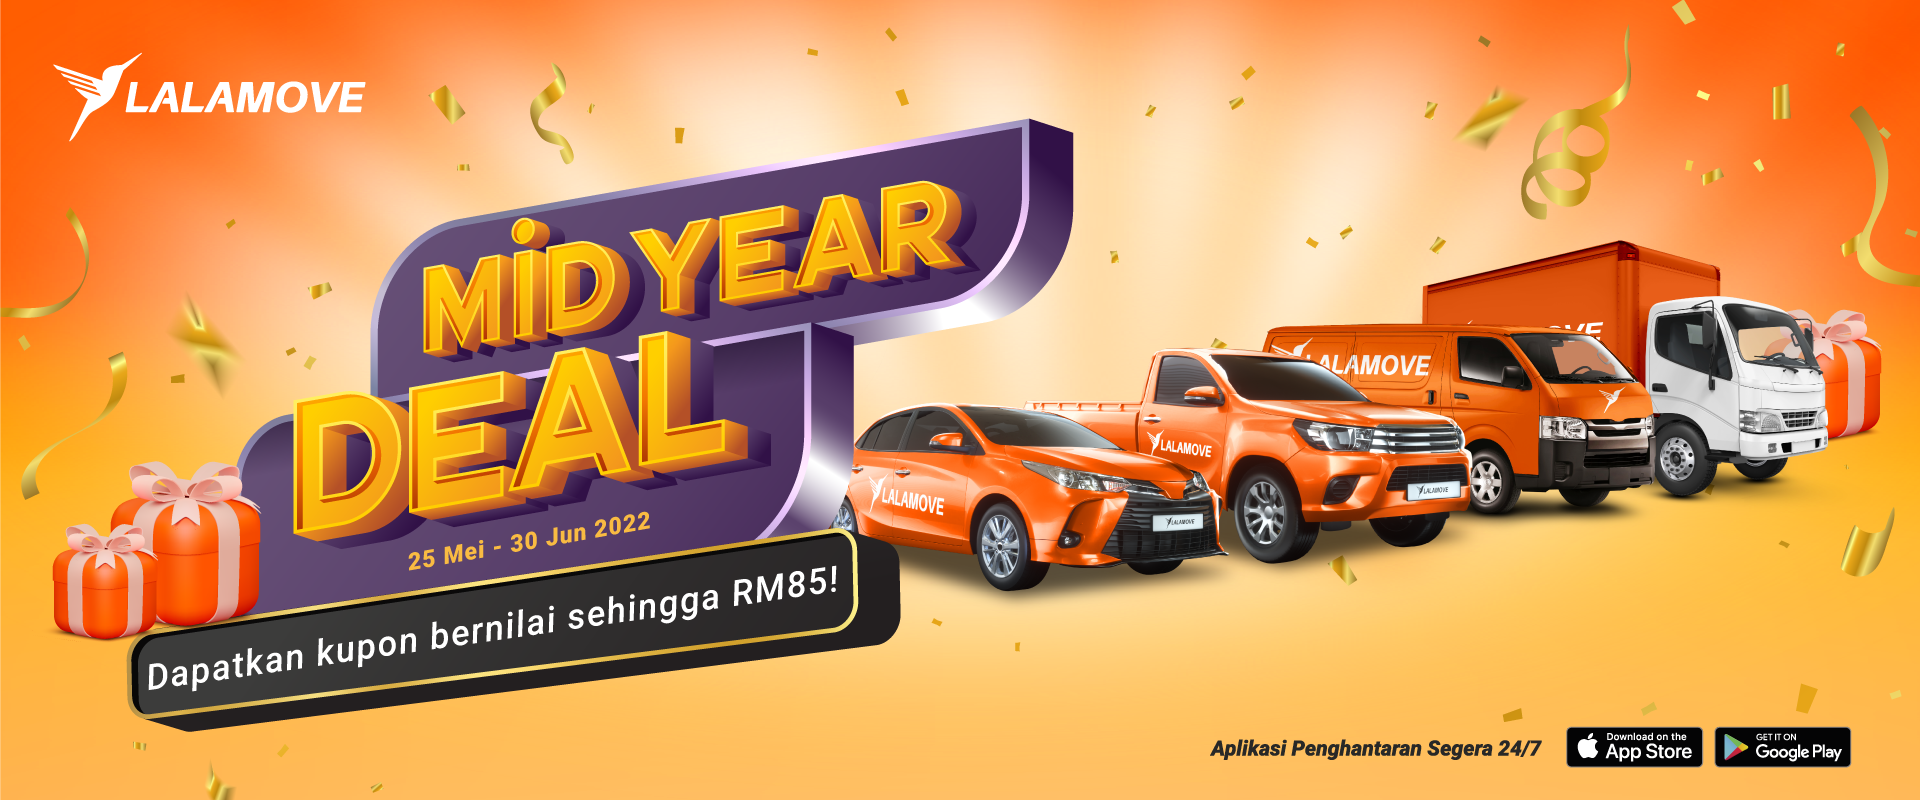 Lalamove Mid Year Deal web banner malay